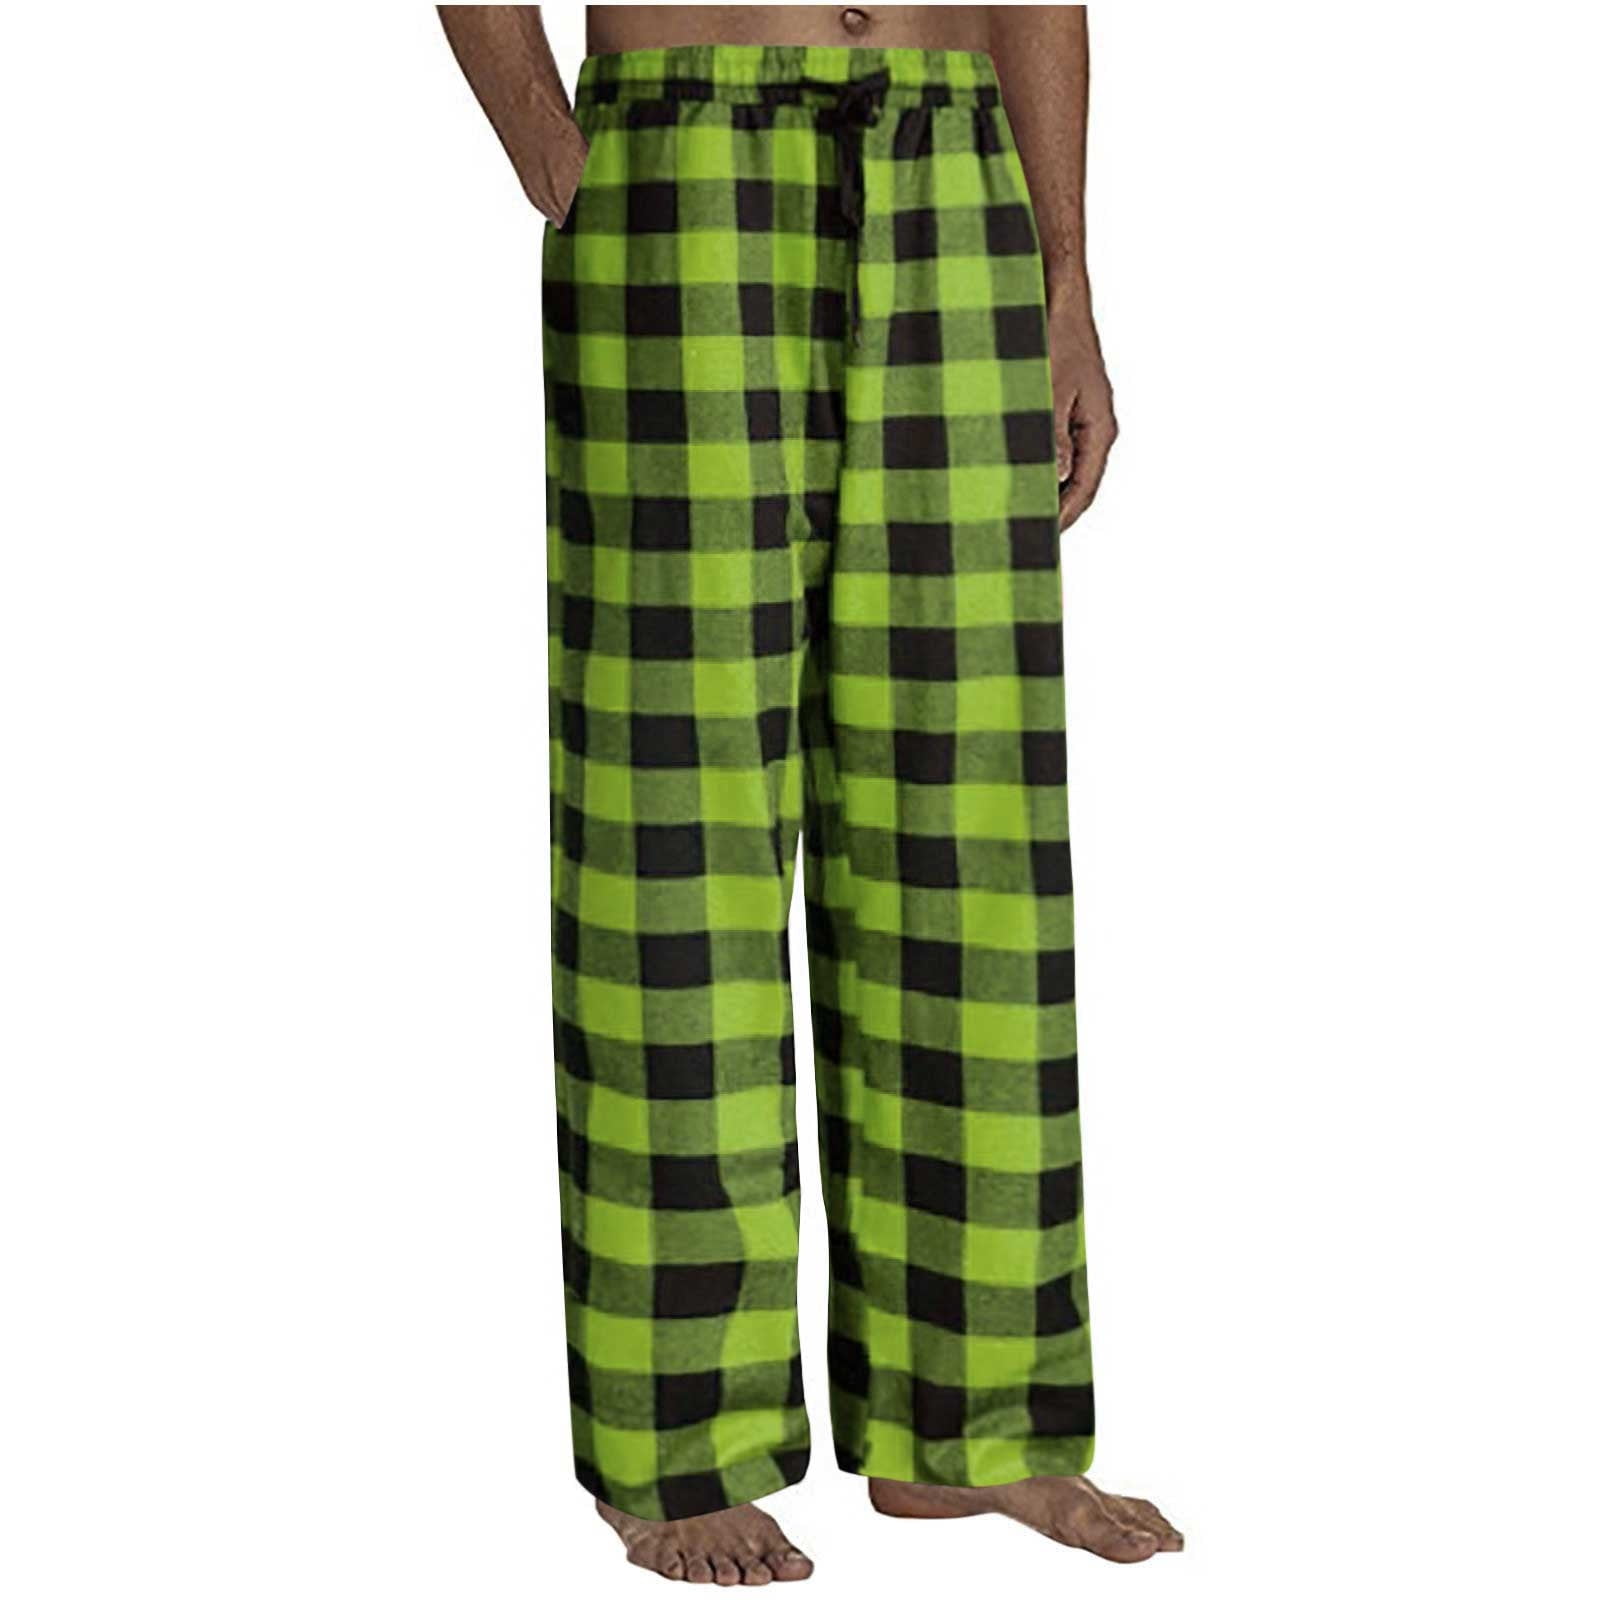 Oalirro Army Green Men's Pajama Pants Plaid Lounge Warm Sleepwear Chrismtas Pajama  Pants PJ Bottoms Drawstring and Pockets 